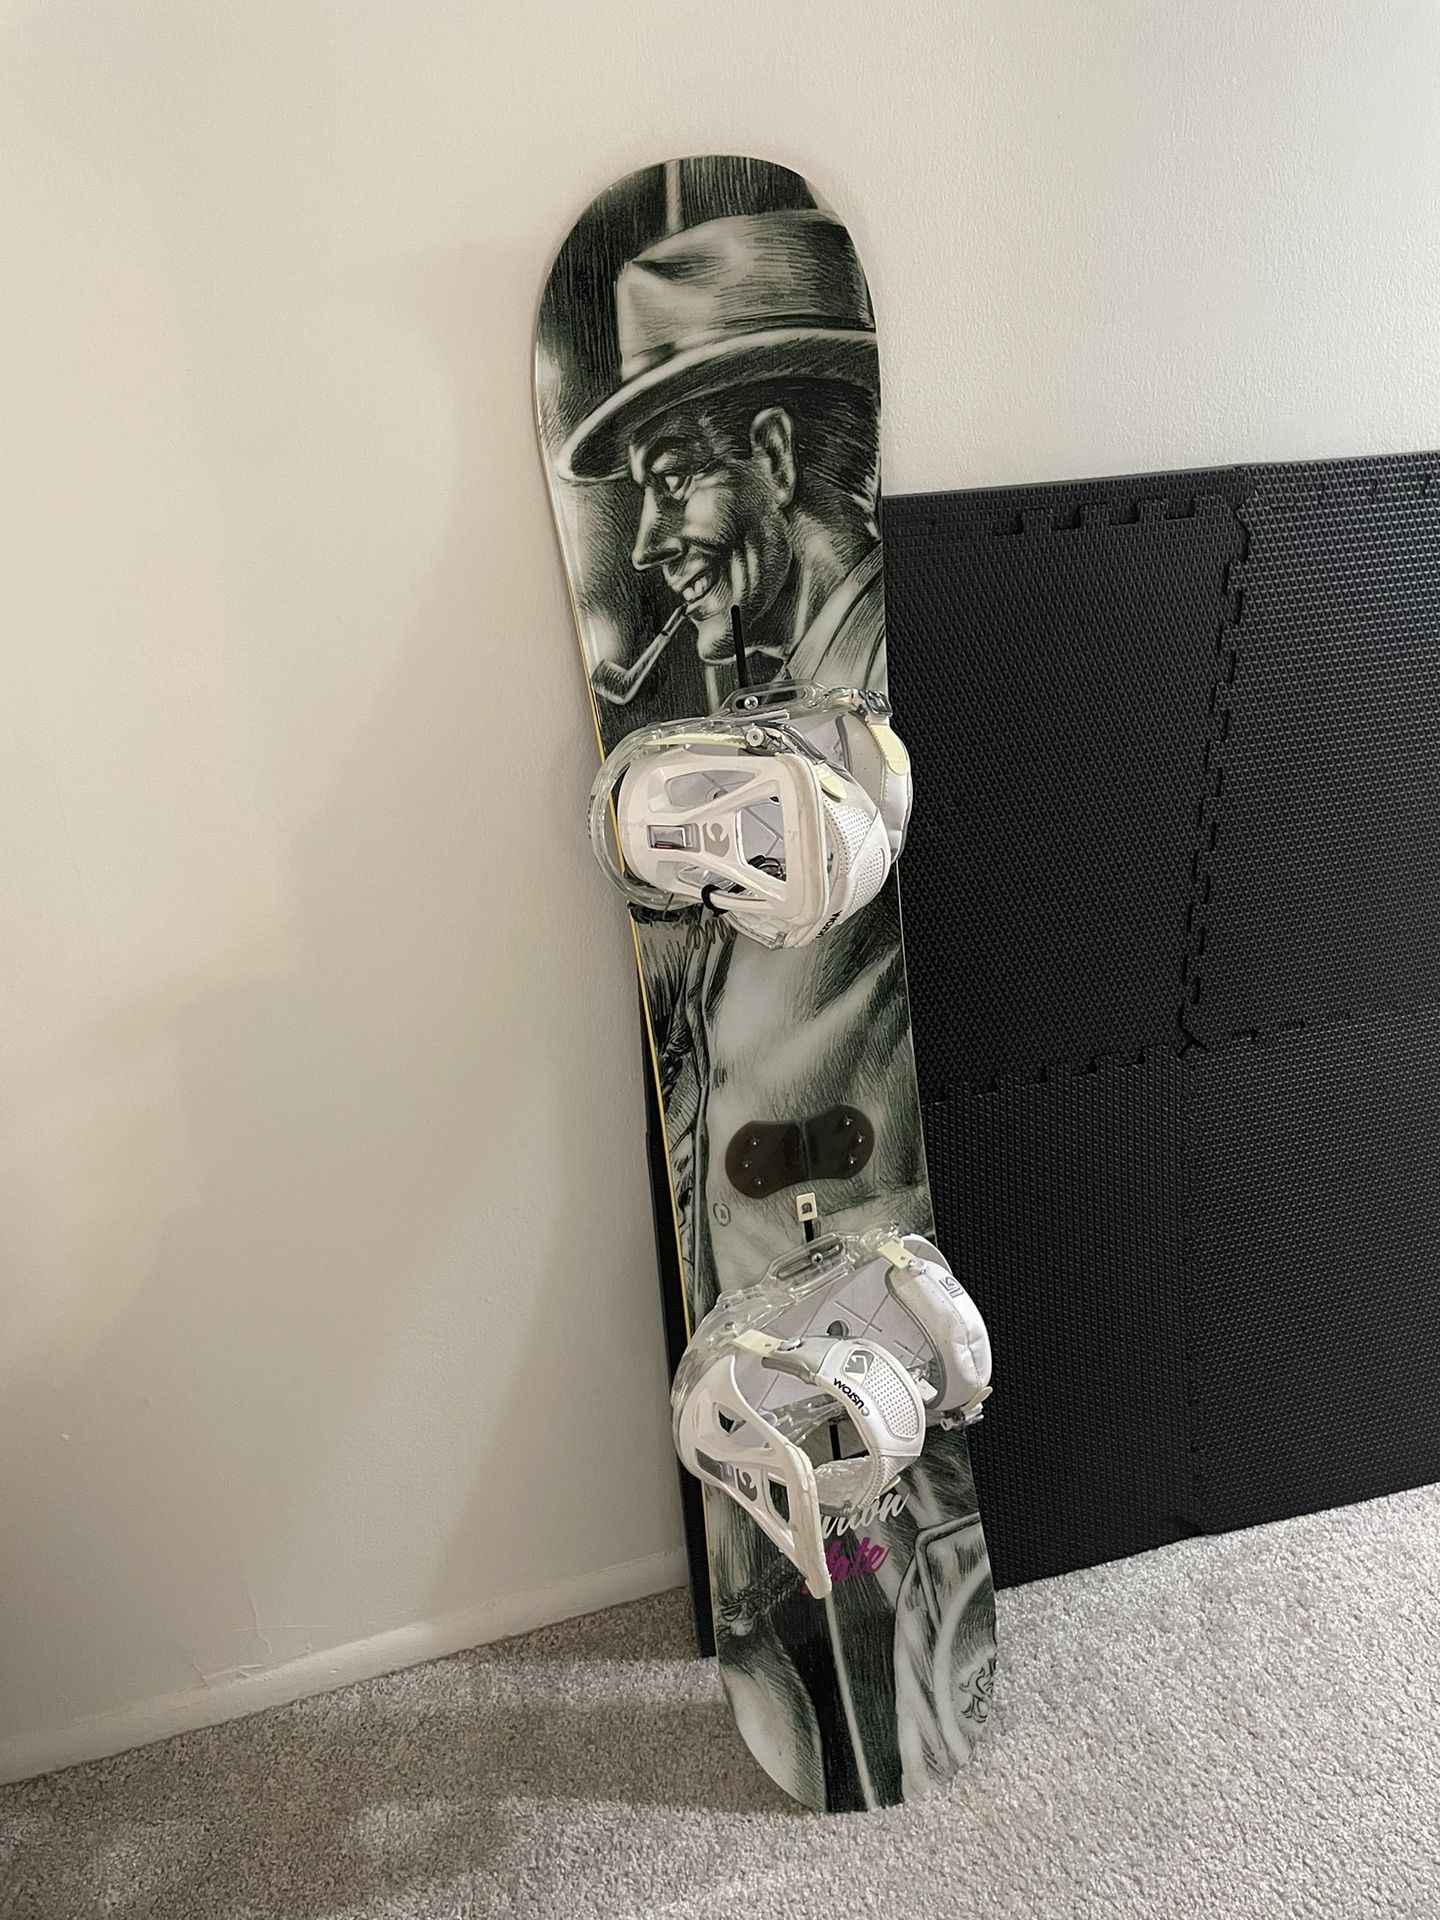 Burton snowboard, Boots & Bag - Ready To Go